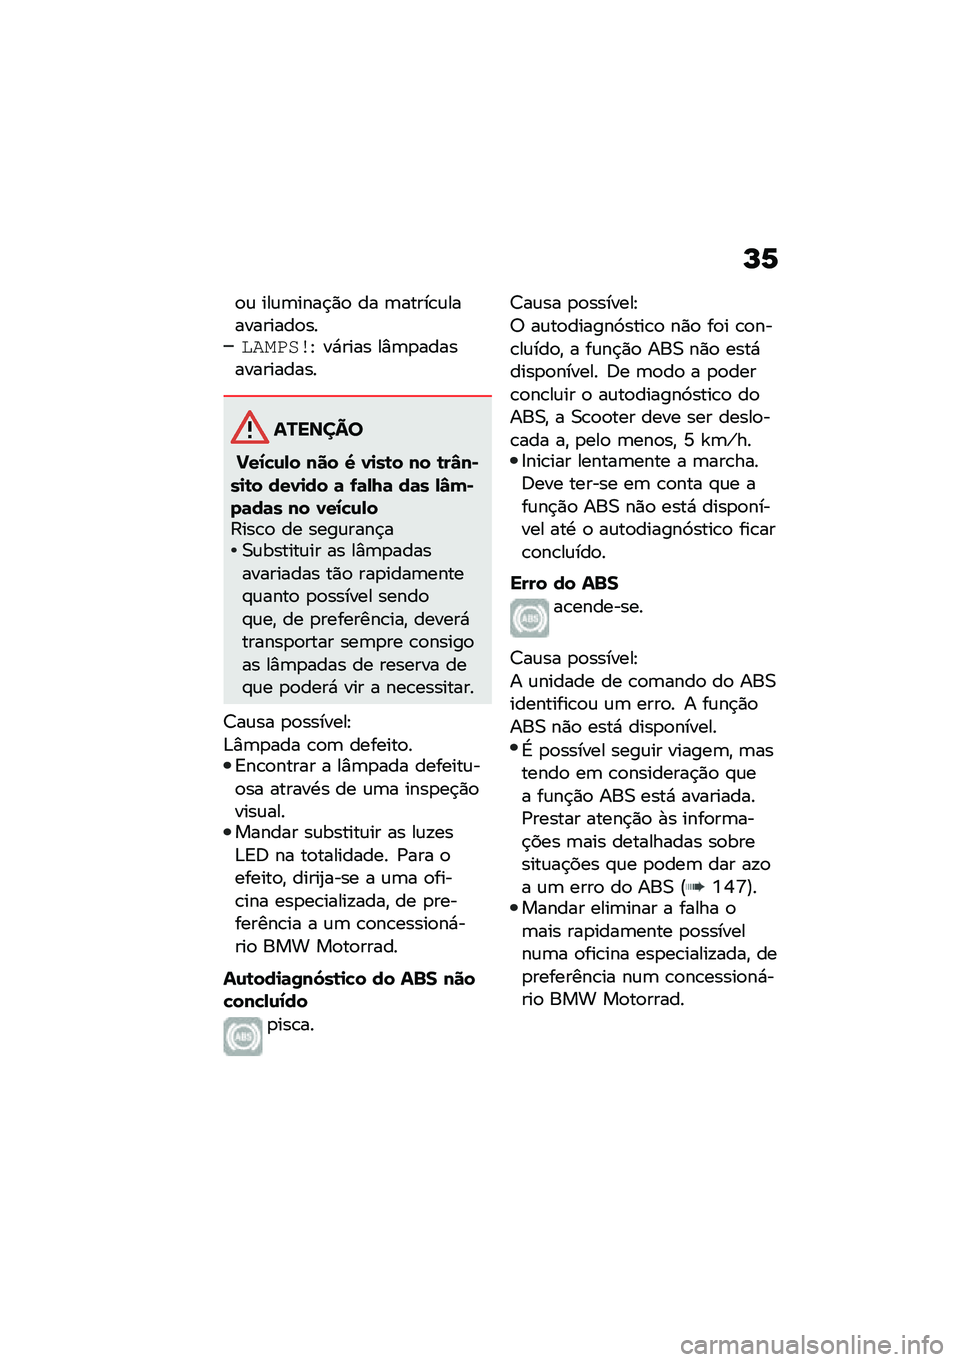 BMW MOTORRAD C 400 GT 2020  Manual do condutor (in Portuguese) �L�1
�
�\f ���\f�	����$�)�
 �� �	�����\b�\f����������
���������J ��*���� ��%�	�
��������������
�������
�!��2�"�\f�-� ��� �S �1�
��\b� ��